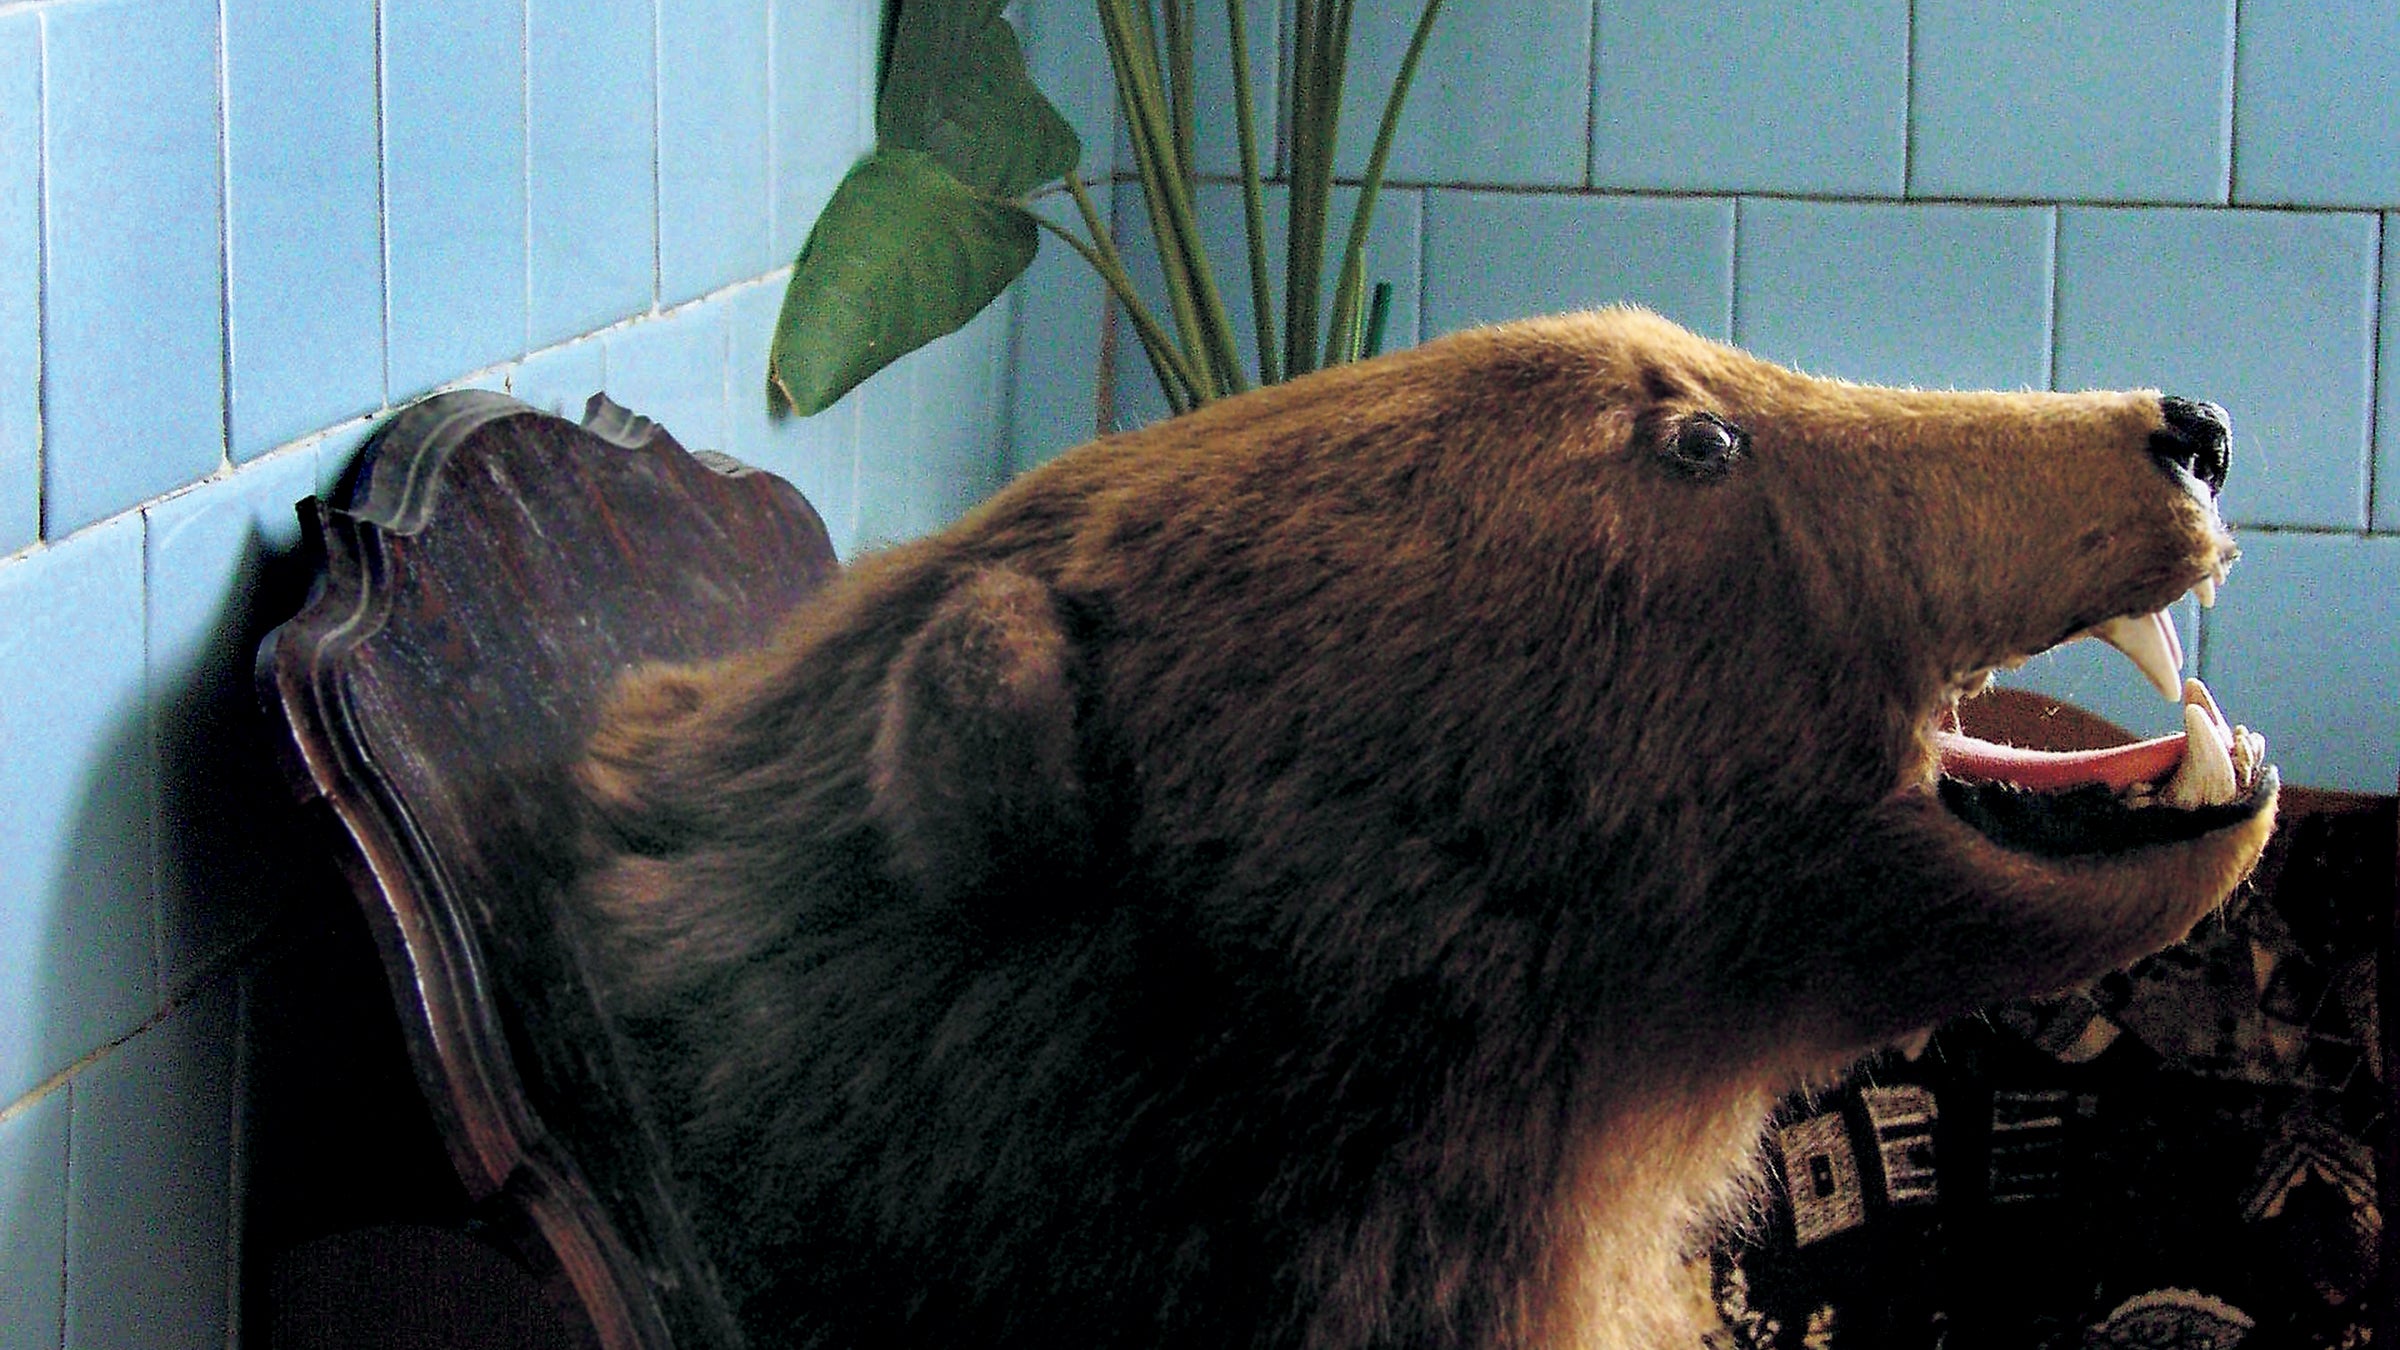 Kodiak Bear 40 Brown Stuffed Animal